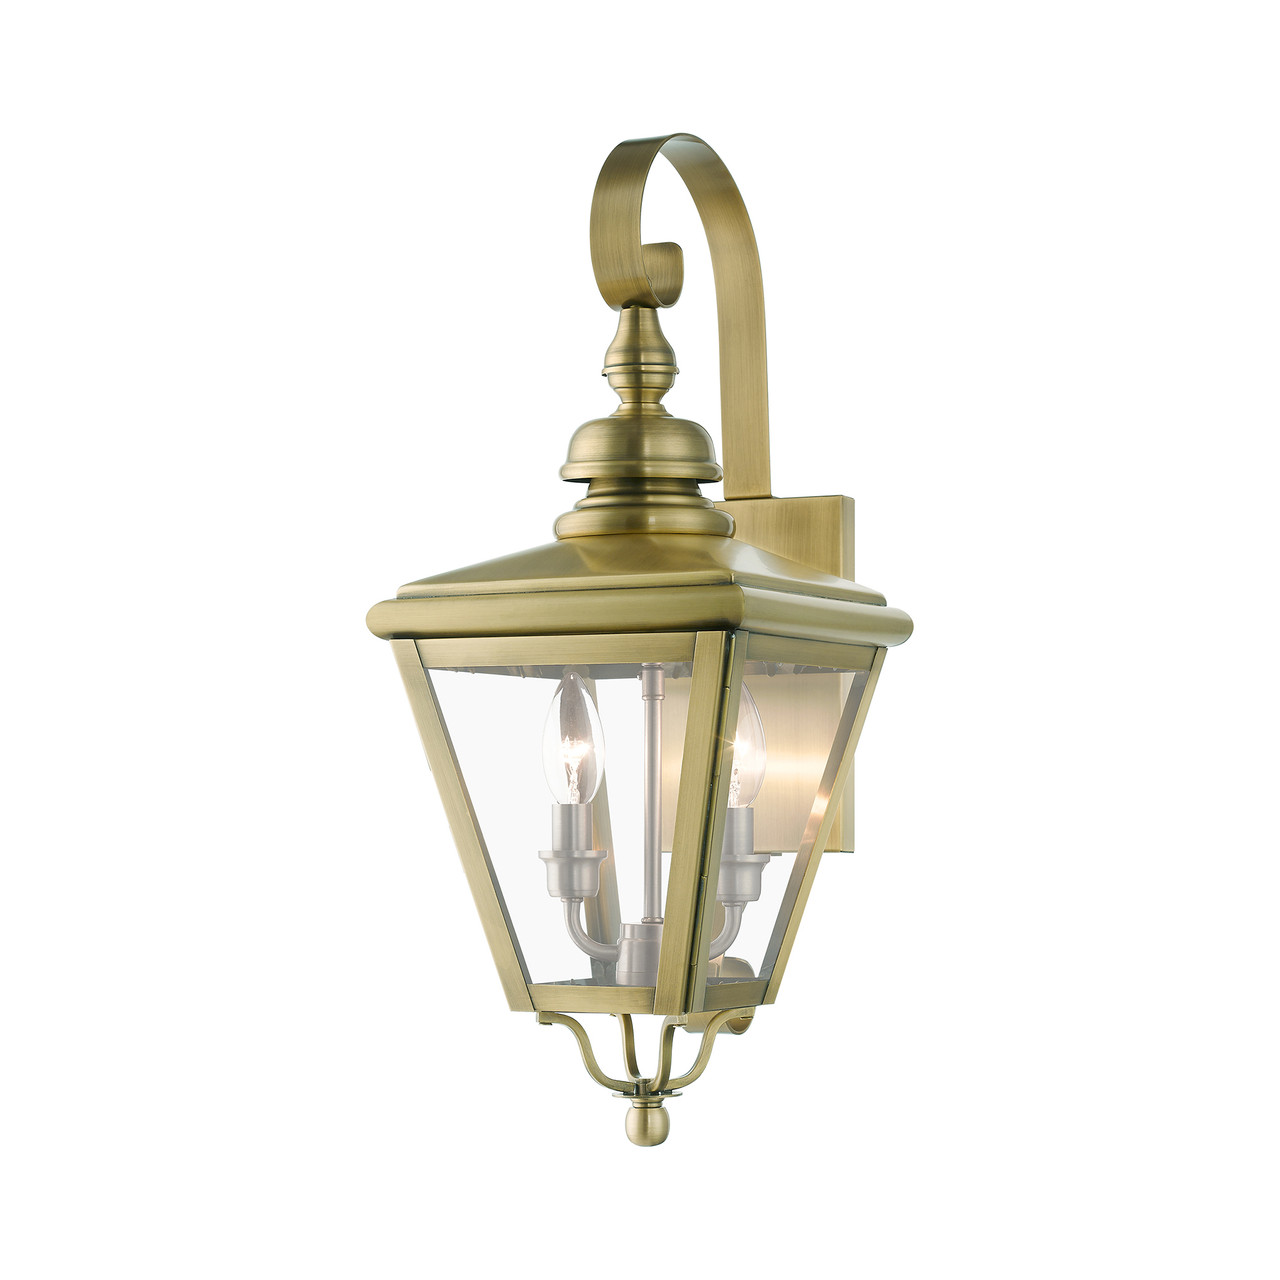 LIVEX LIGHTING 27372-01 2 Light Antique Brass Outdoor Medium Wall Lantern with Brushed Nickel Finish Cluster